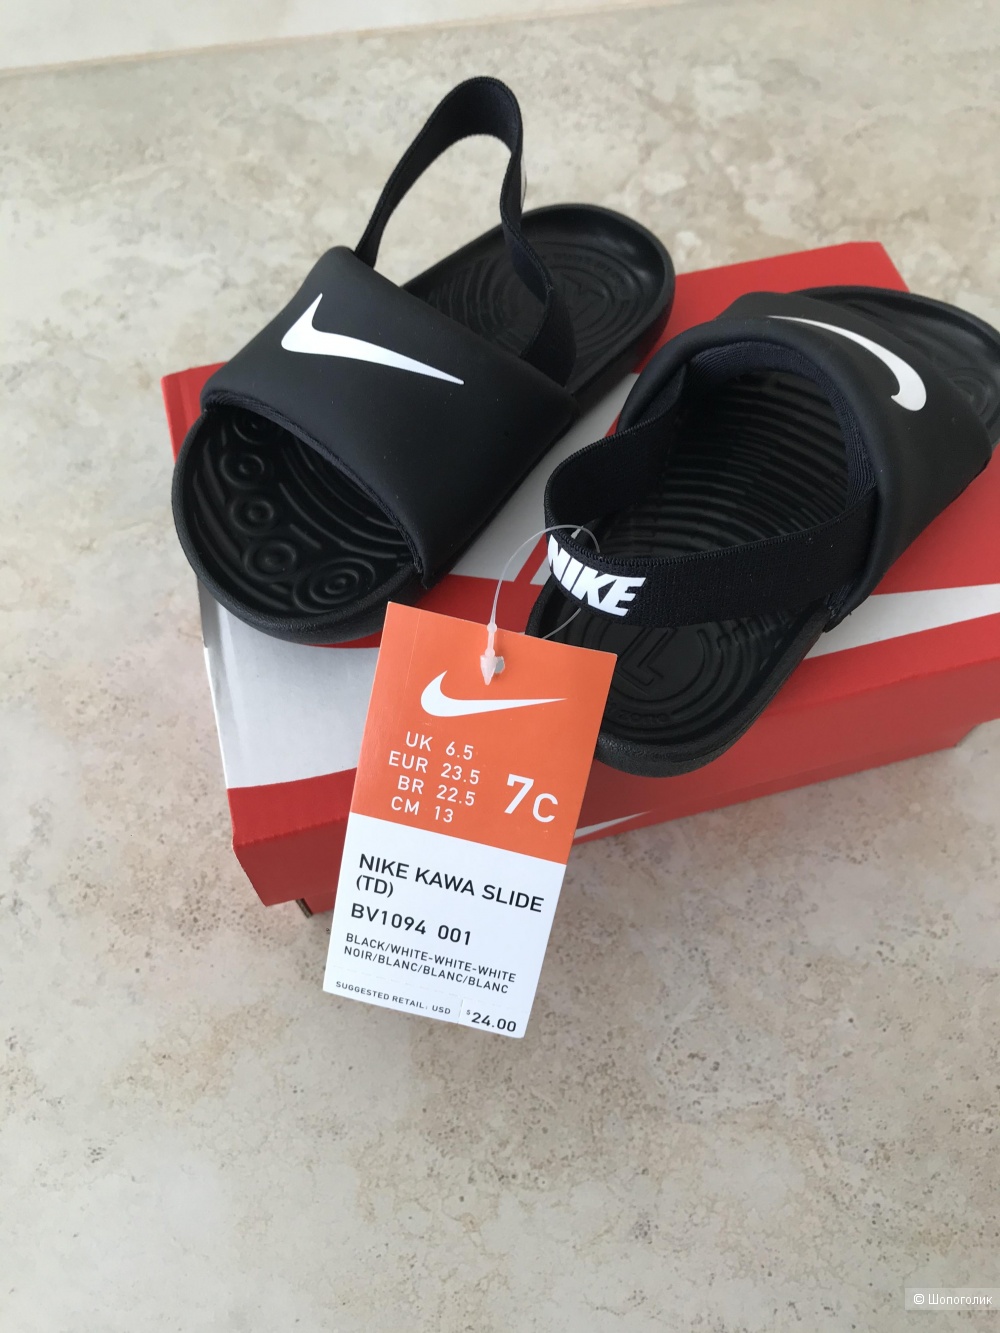 Детские сандалии Nike, 22 размер